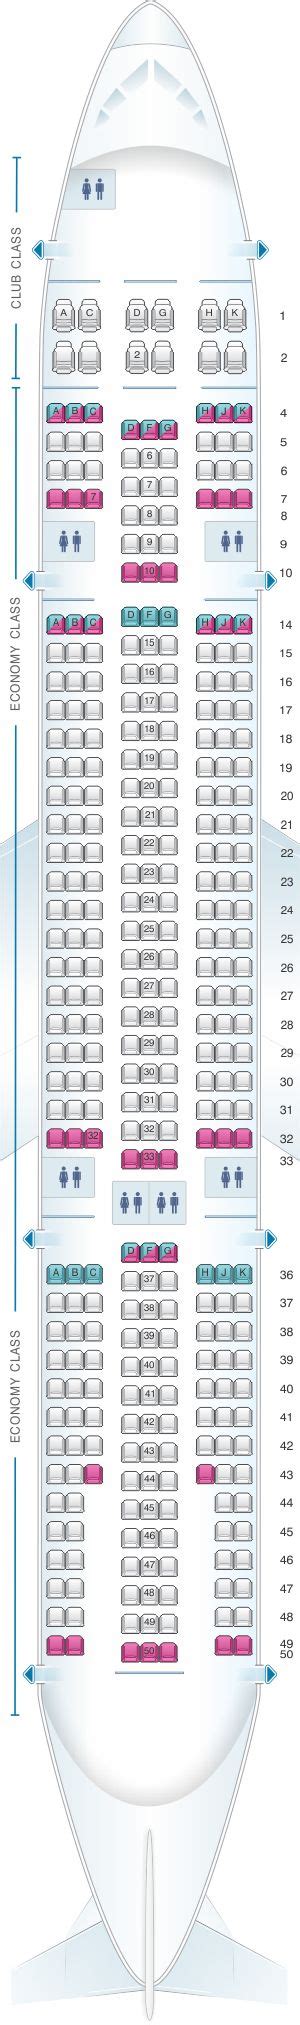 Seatguru Seat Map Air Transat Airbus A Layout Sexiz Pix